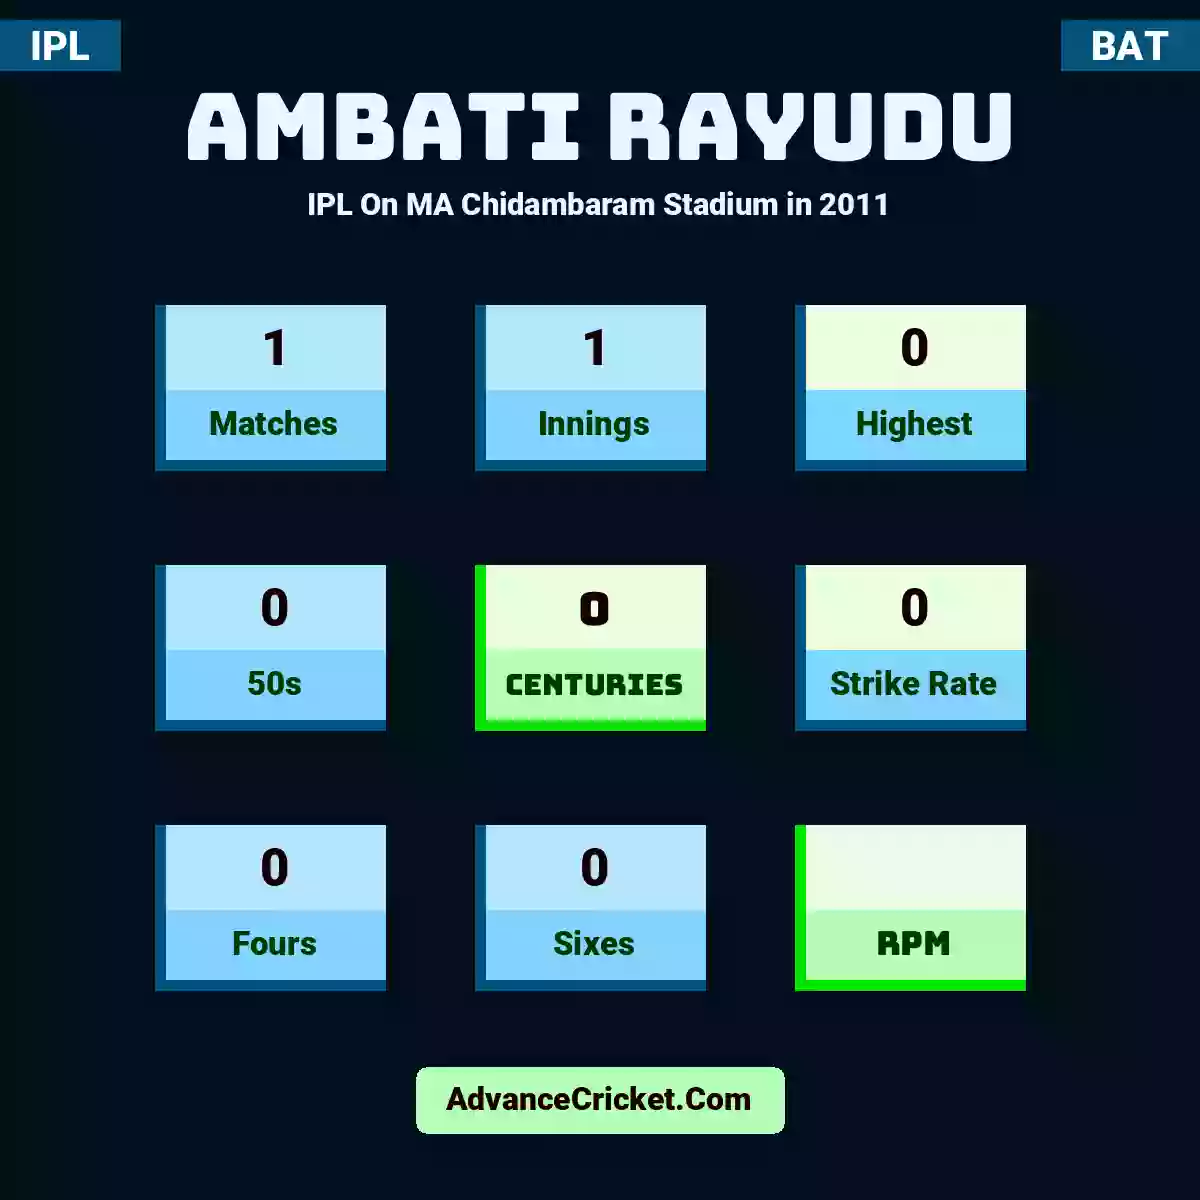 Ambati Rayudu IPL  On MA Chidambaram Stadium in 2011, Ambati Rayudu played 1 matches, scored 0 runs as highest, 0 half-centuries, and 0 centuries, with a strike rate of 0. A.Rayudu hit 0 fours and 0 sixes.